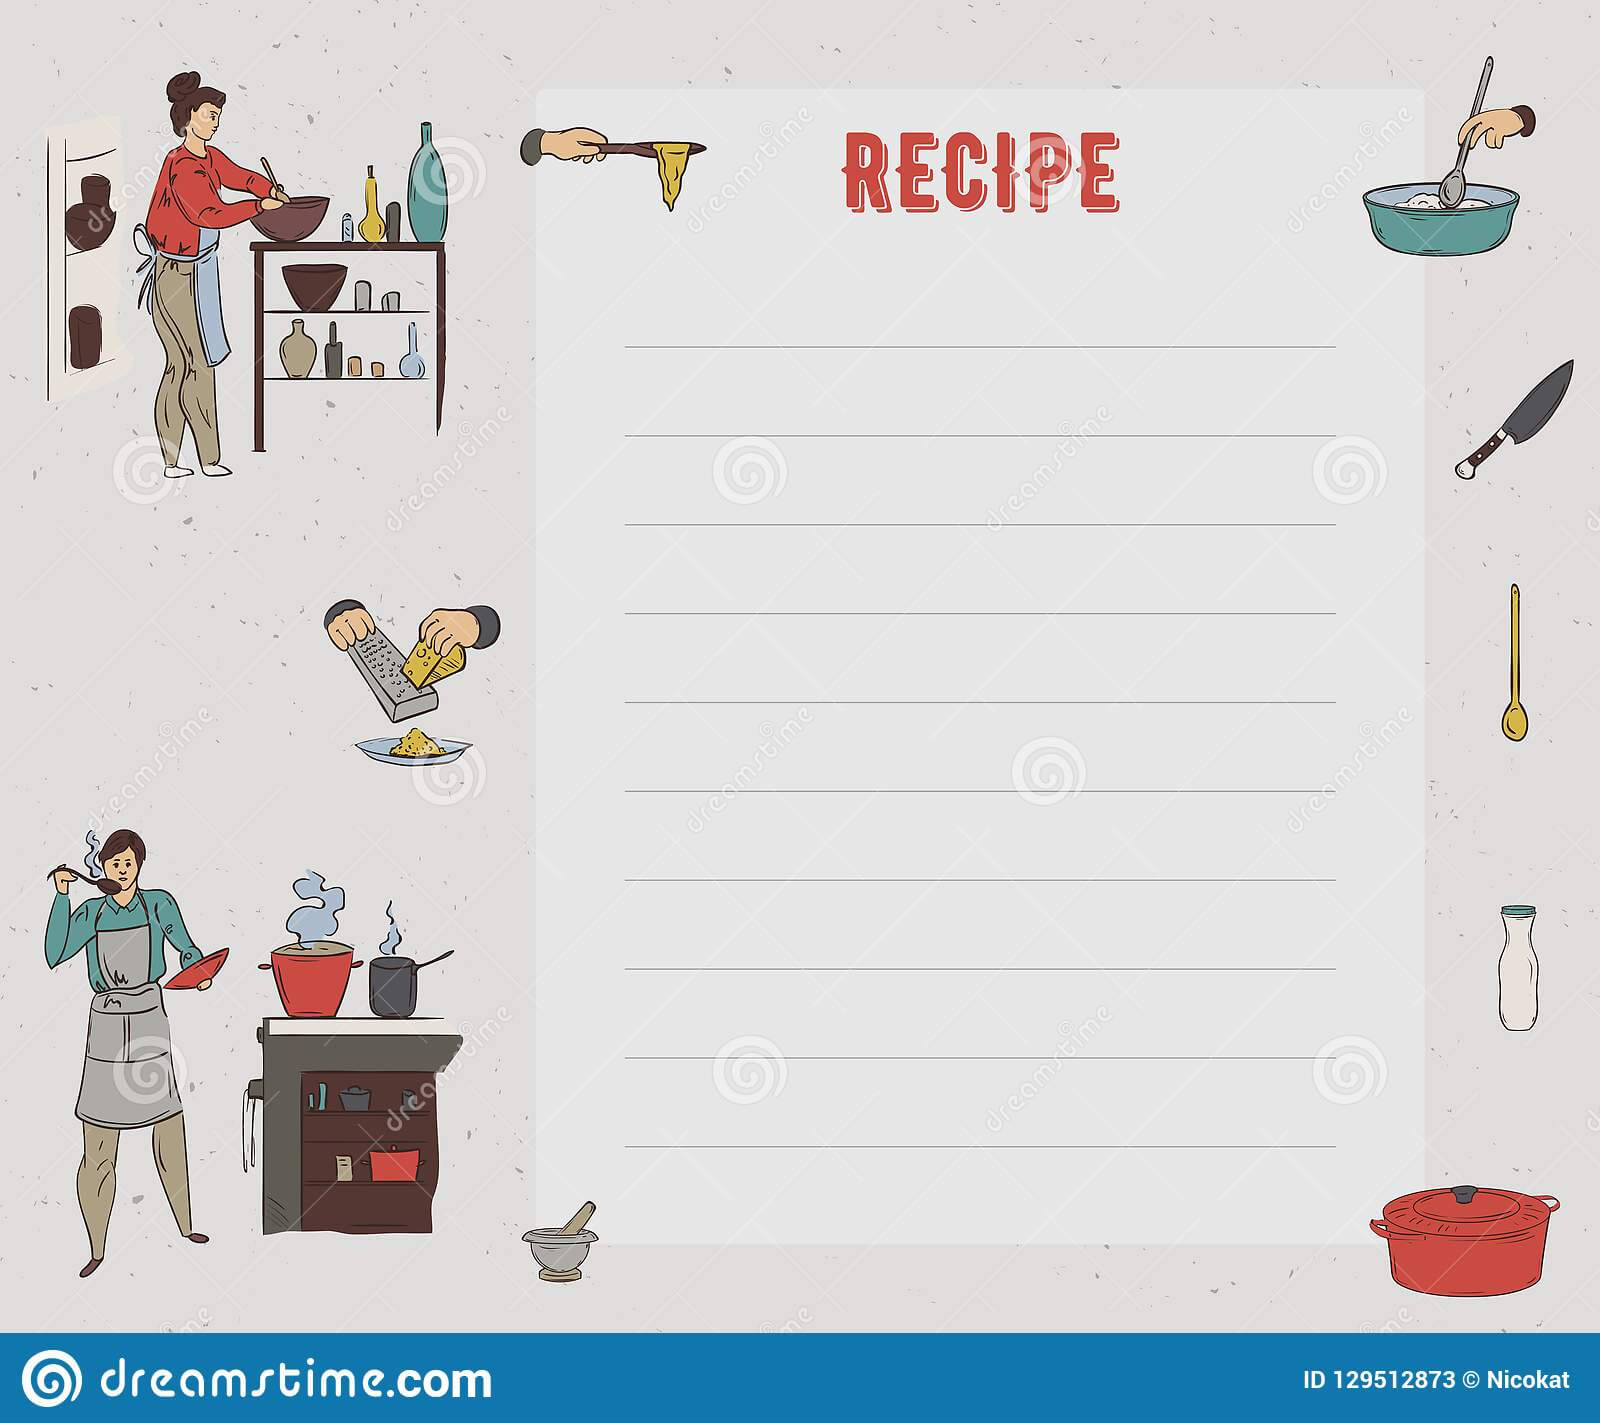 Recipe Card. Cookbook Page. Design Template With People Inside Restaurant Recipe Card Template